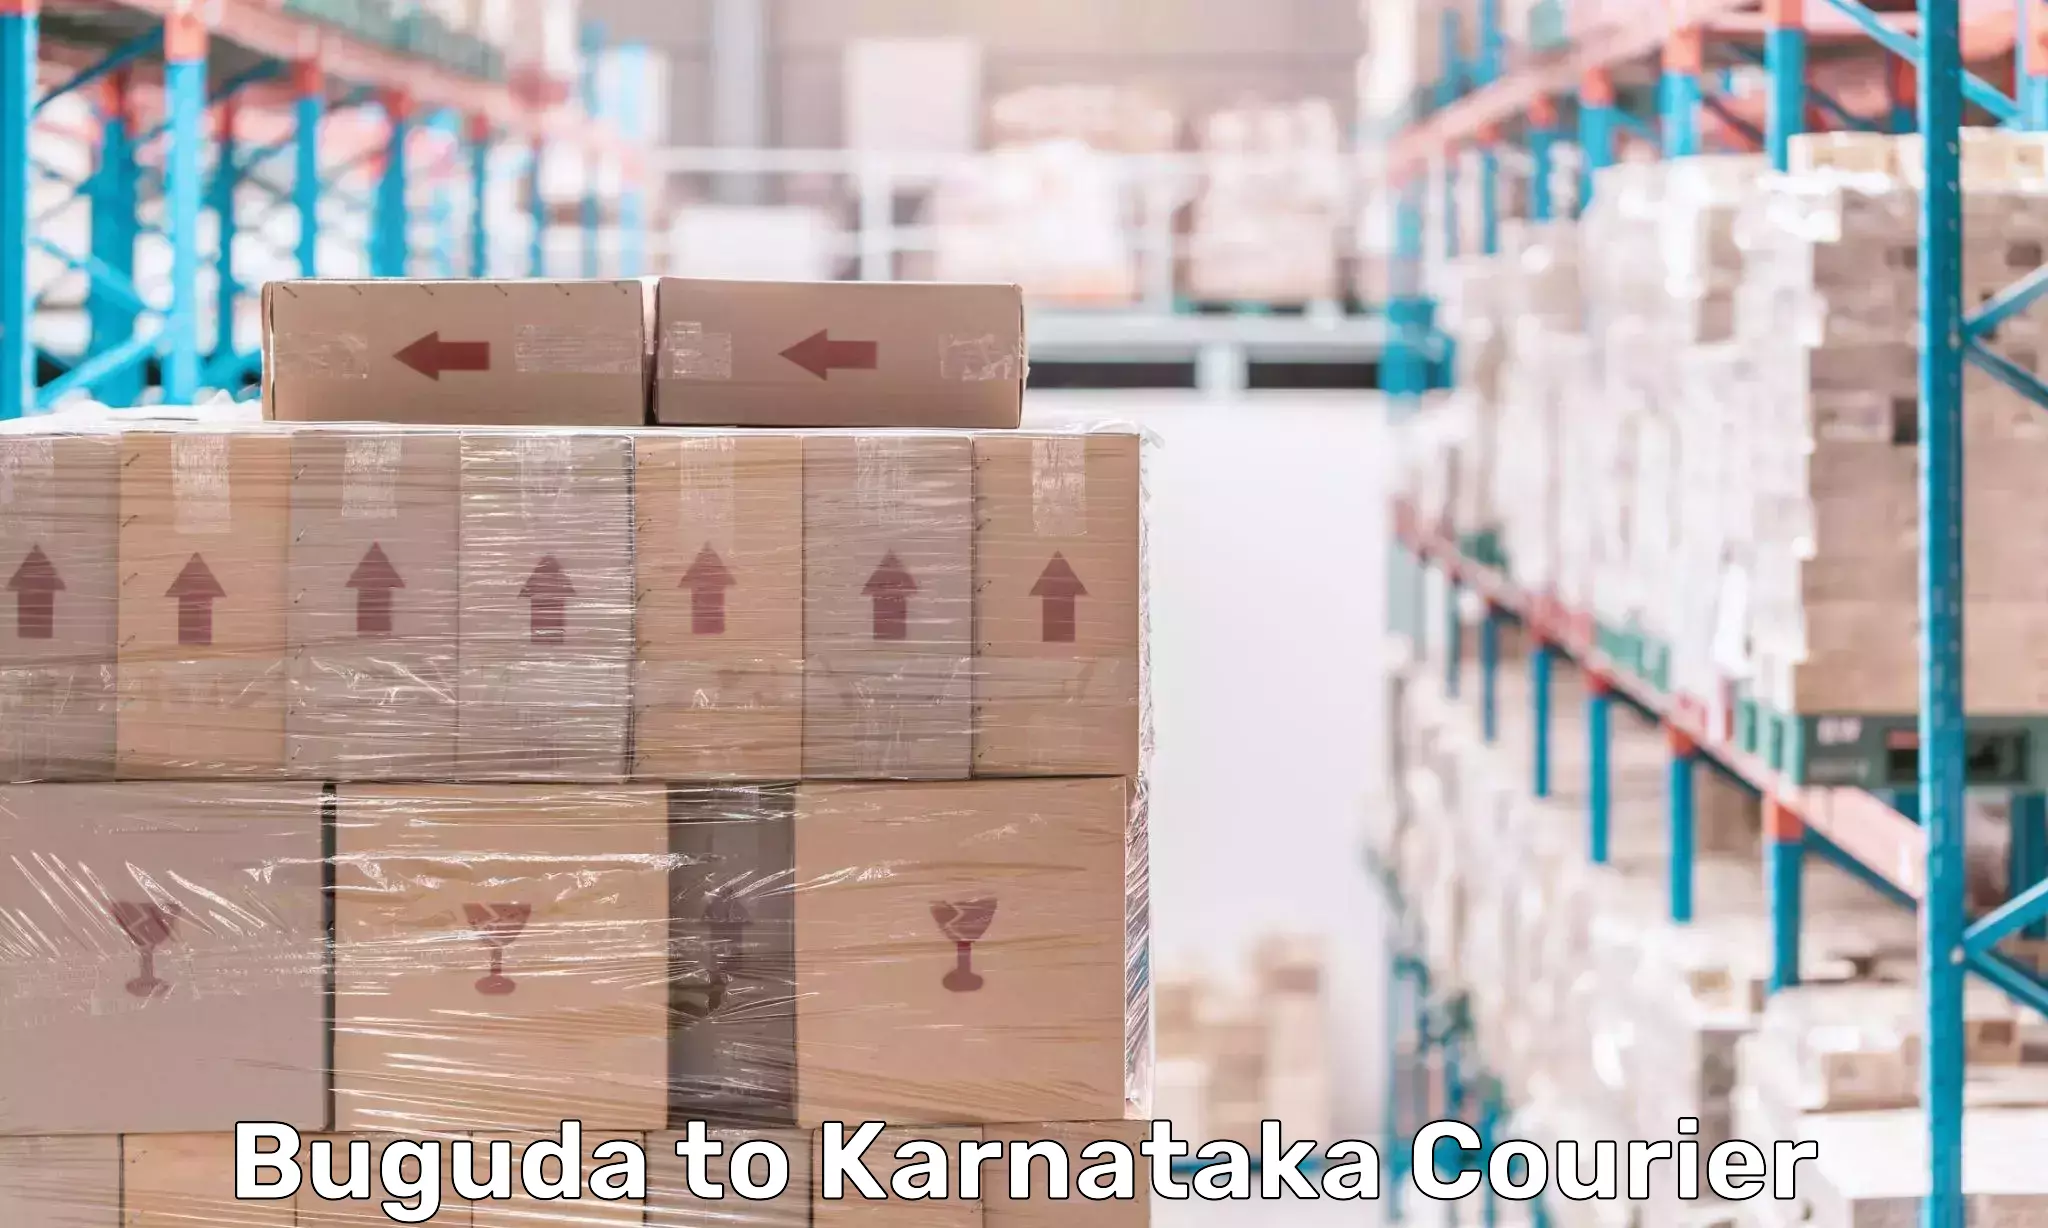 Efficient cargo handling Buguda to Mysore